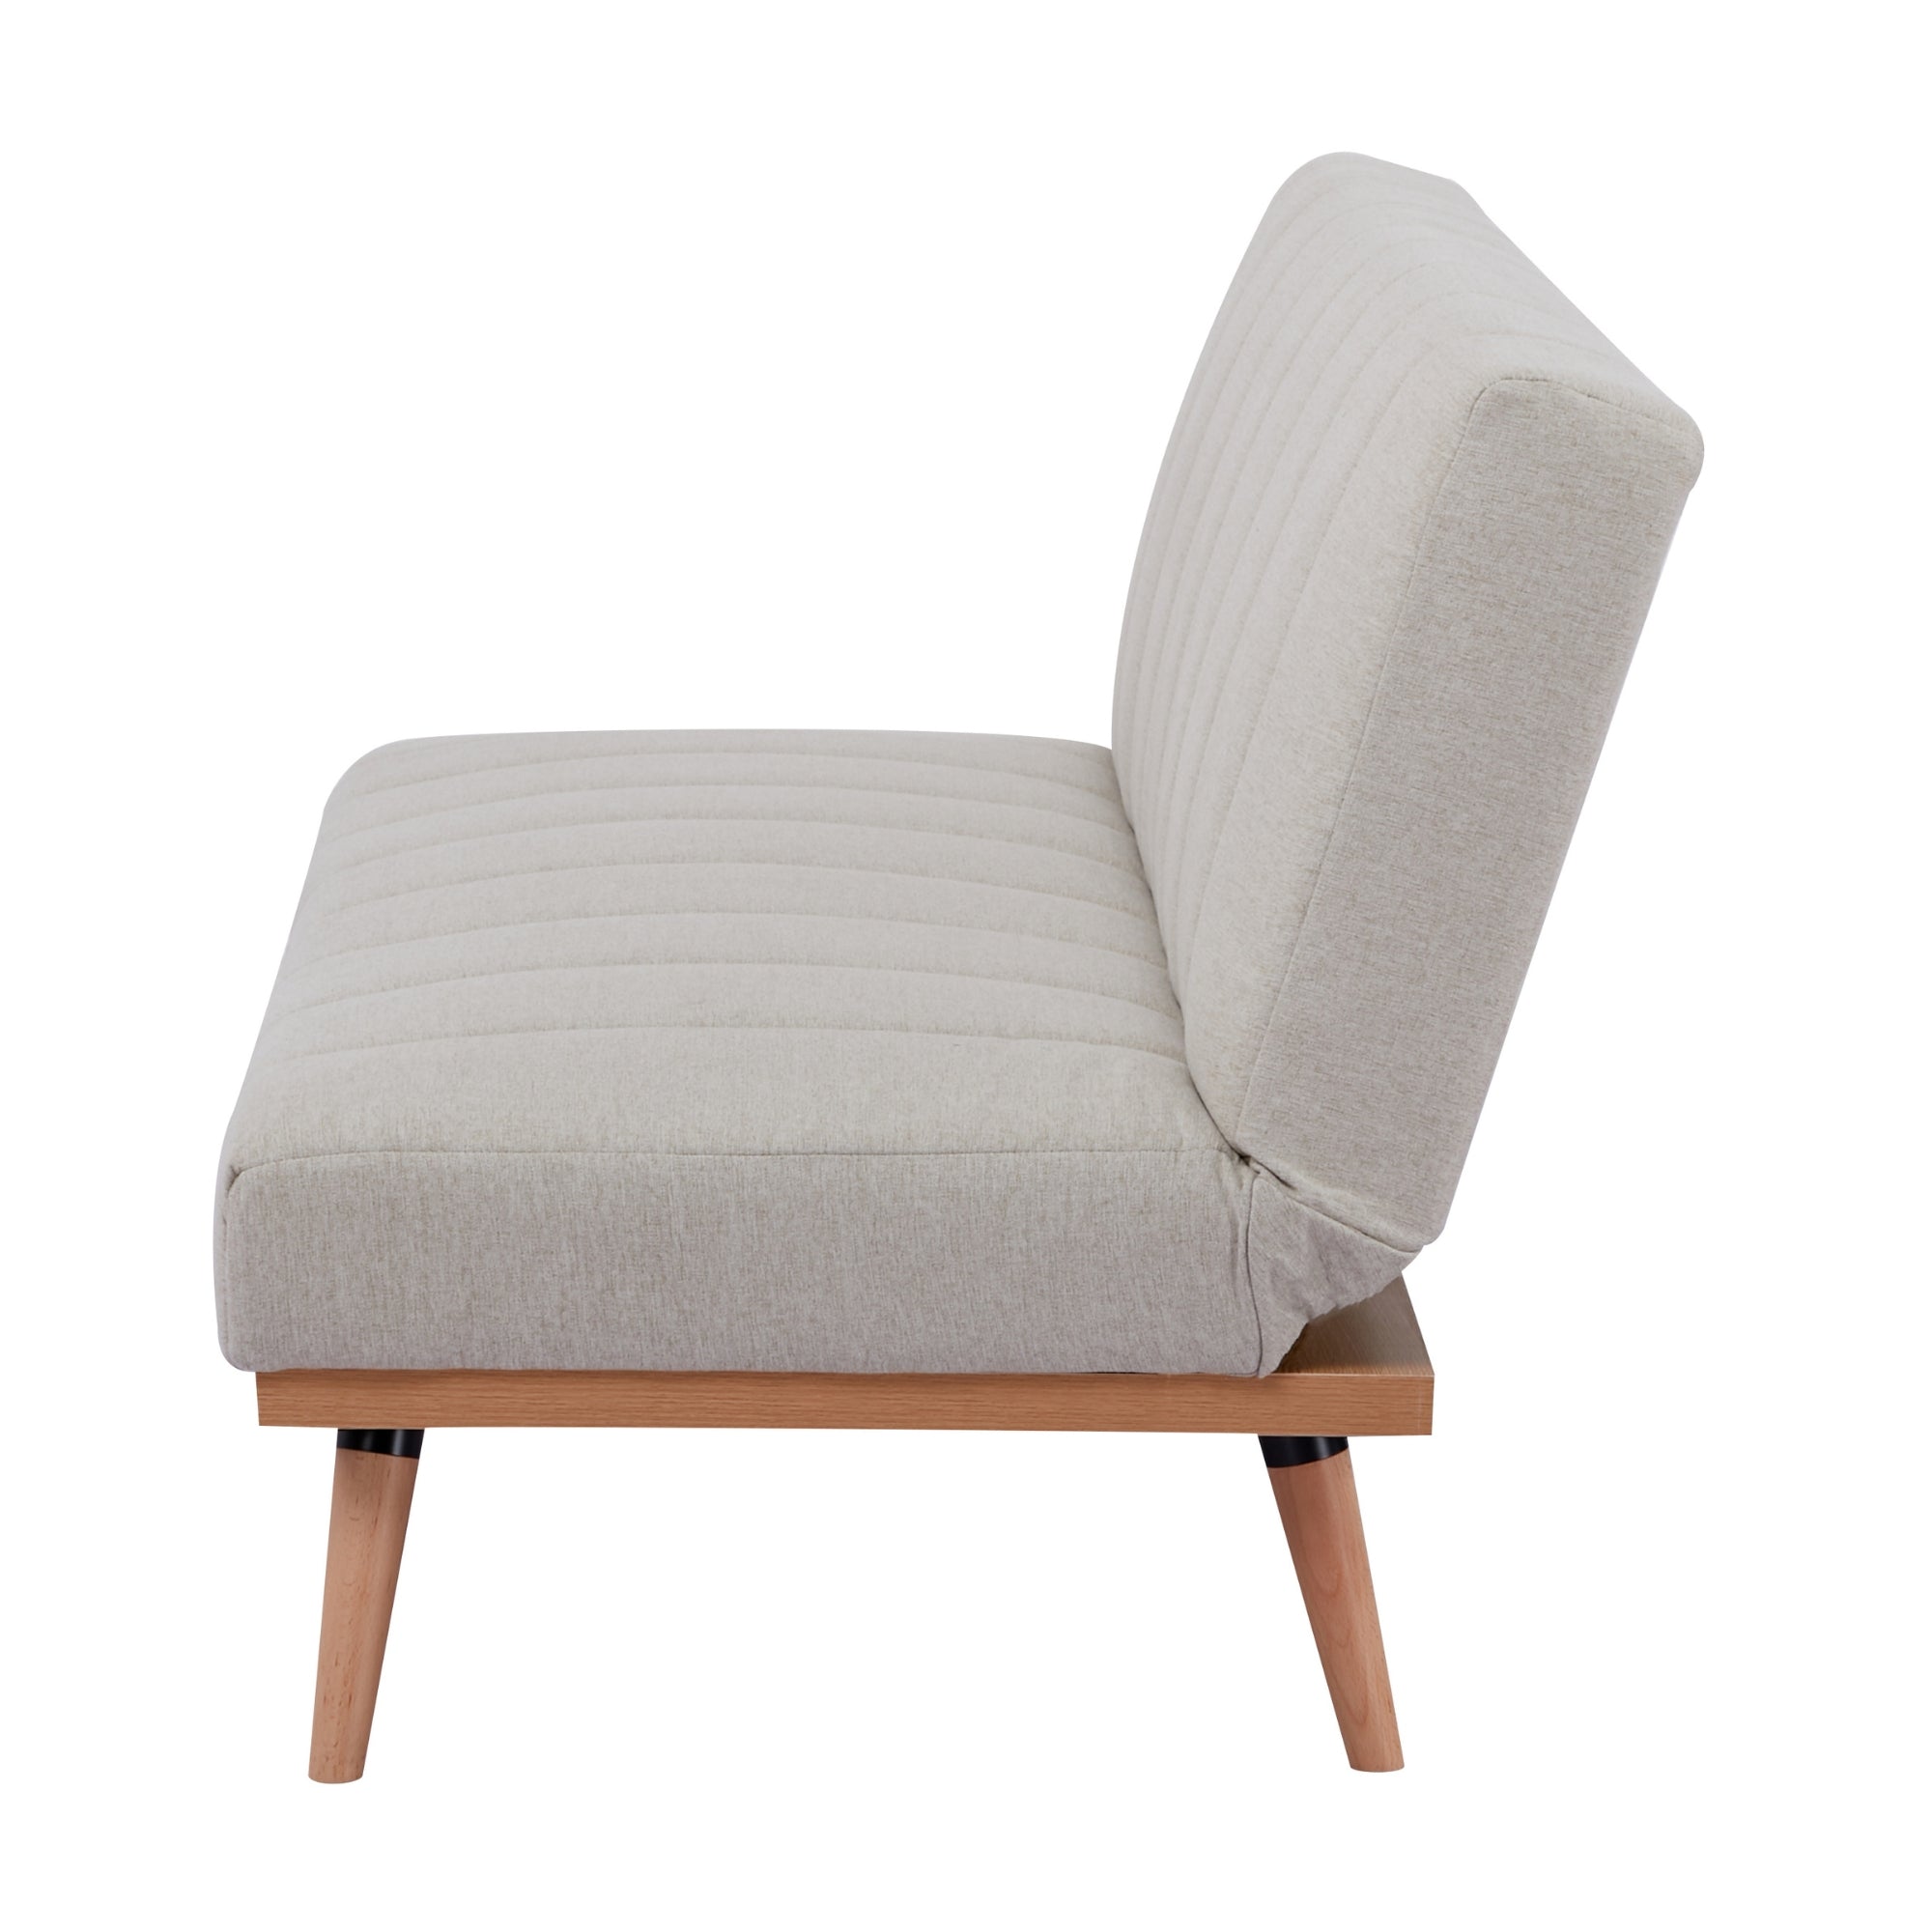 Scandinavian Beige 3-Seater Sofa Bed, Foam Support, Monroe